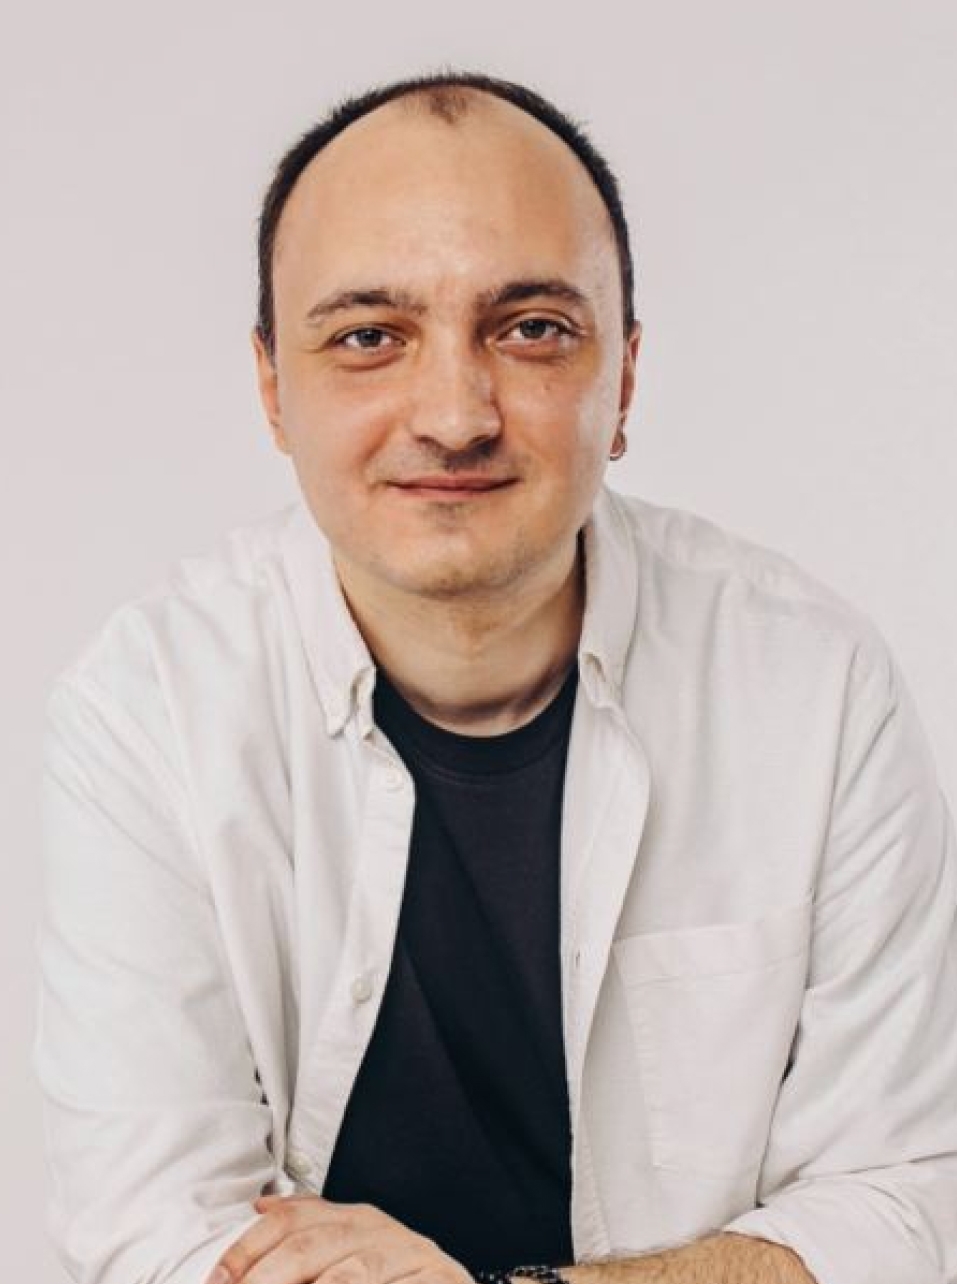 Alex Levayev